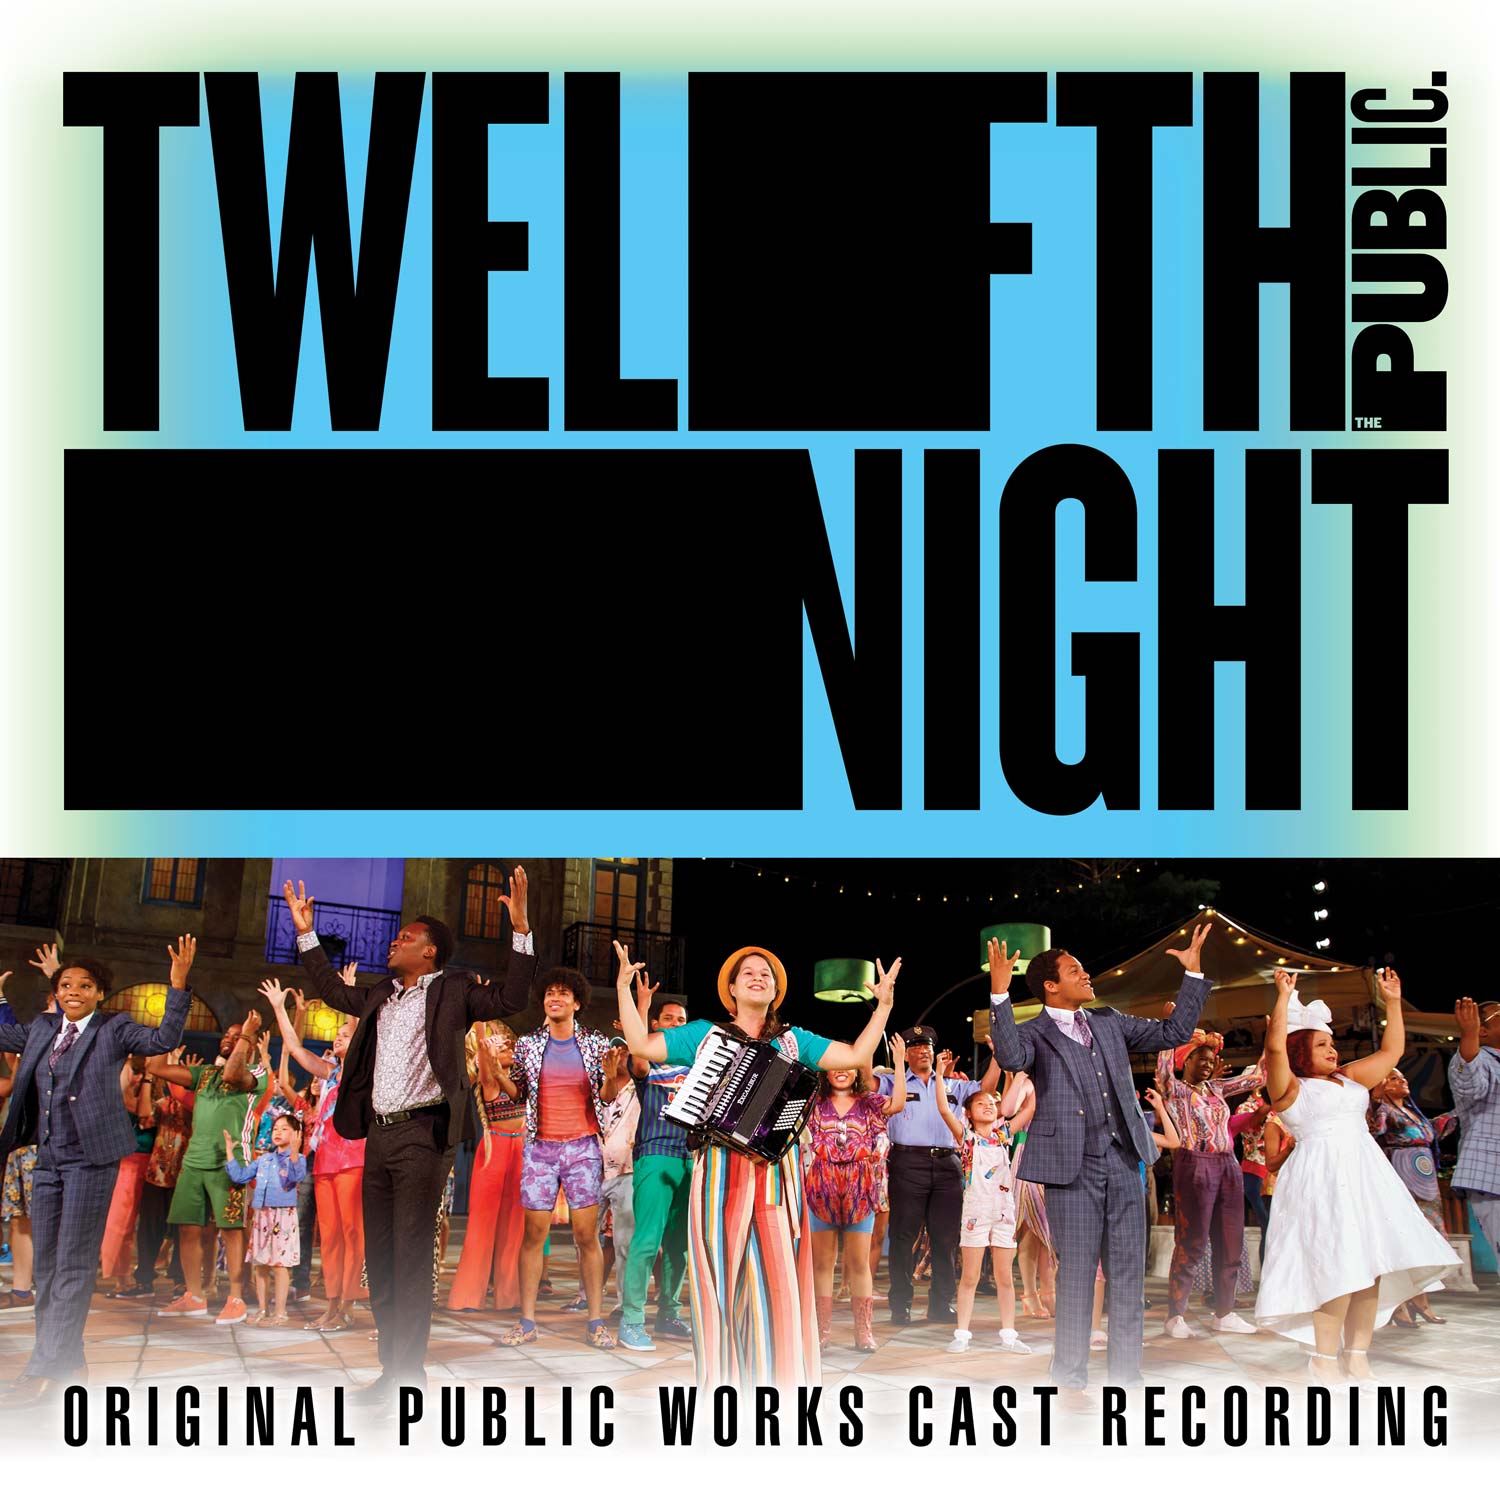 Featured image for “TWELFTH NIGHT (ORIGINAL PUBLIC WORKS CAST RECORDING) [CD]”